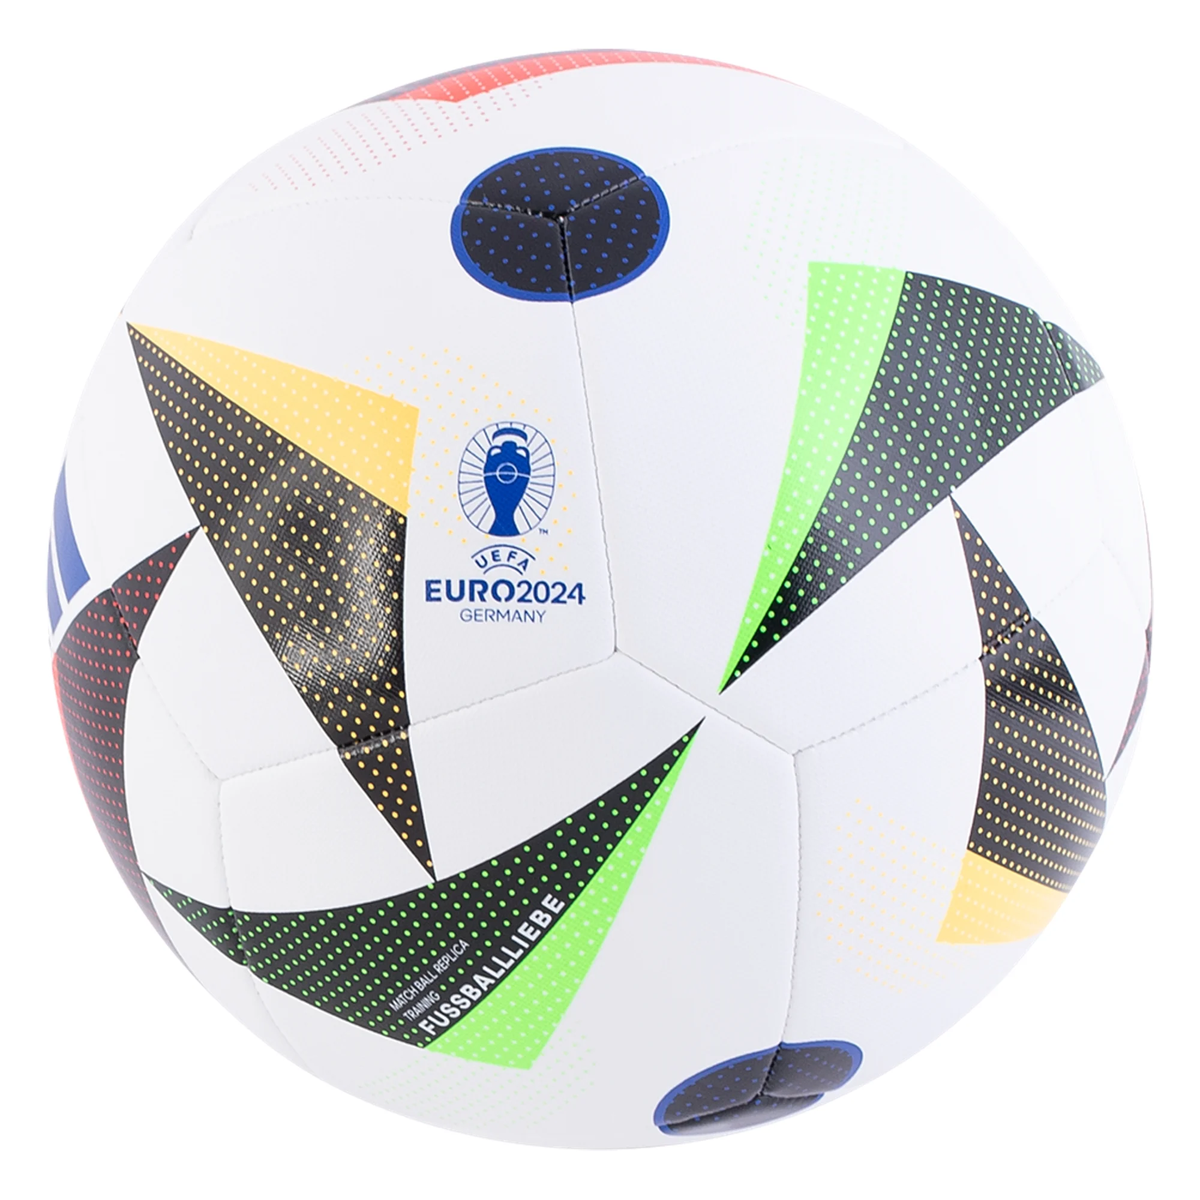 adidas UEFA Euro 2024 Training Ball (White/Black/Glory Blue) Soccer